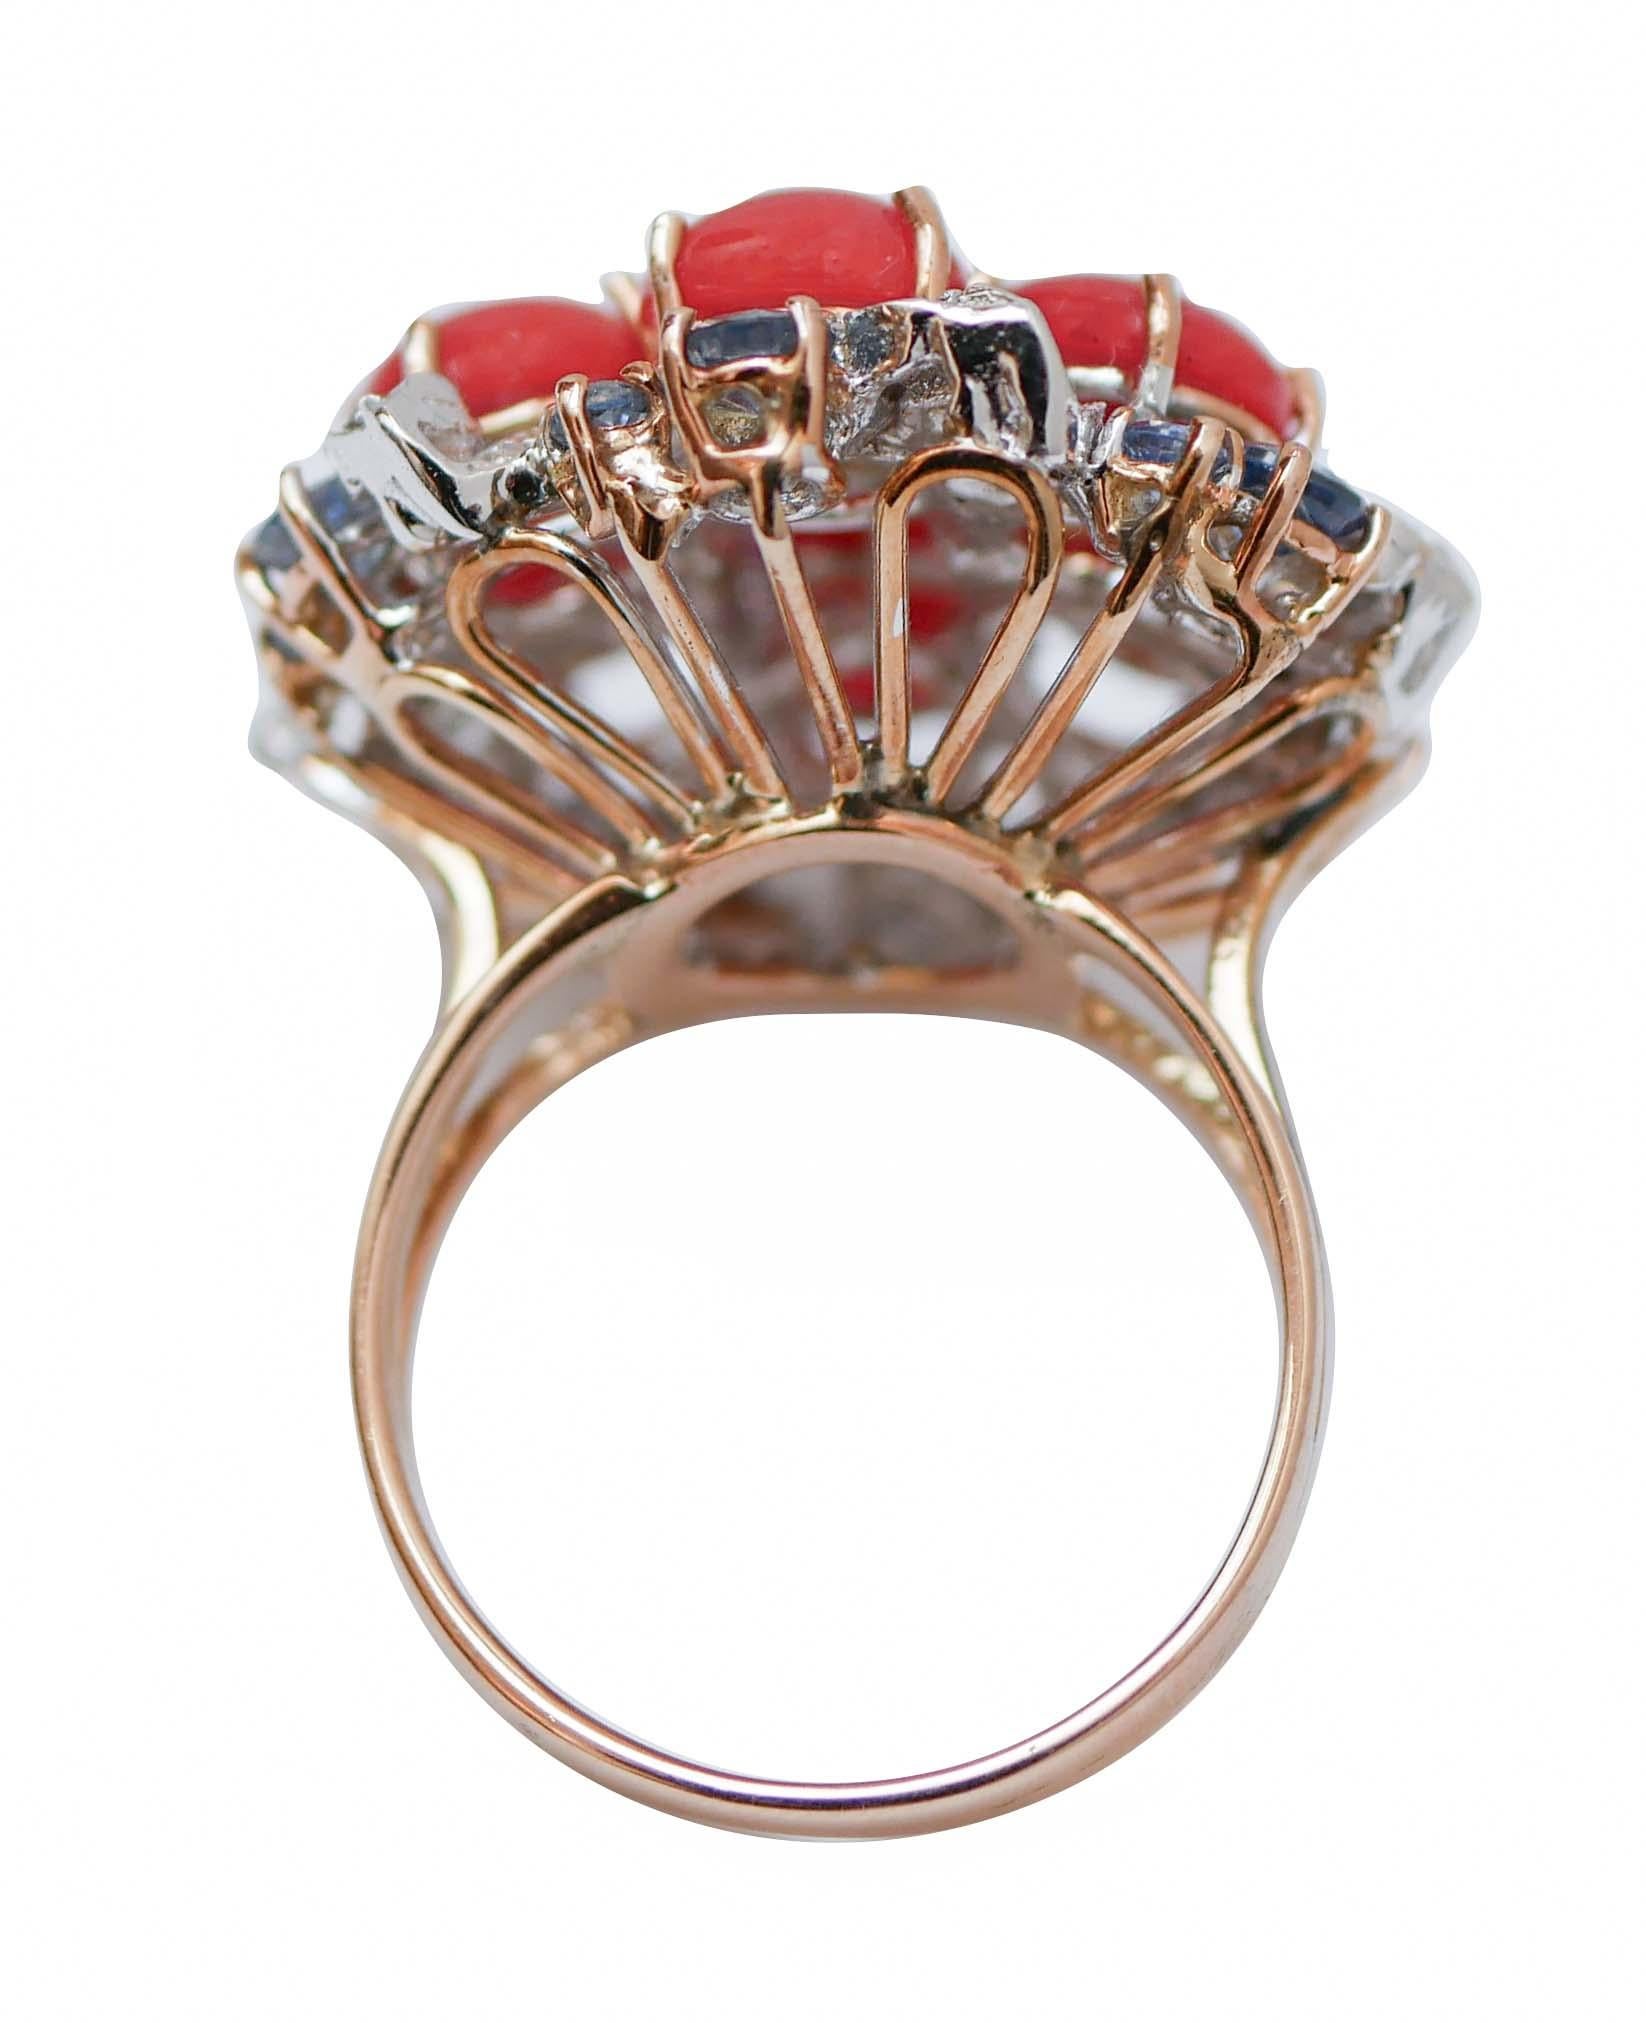 Retro Coral, Sapphires, Diamonds, 14 Karat White and Rose Gold Ring.